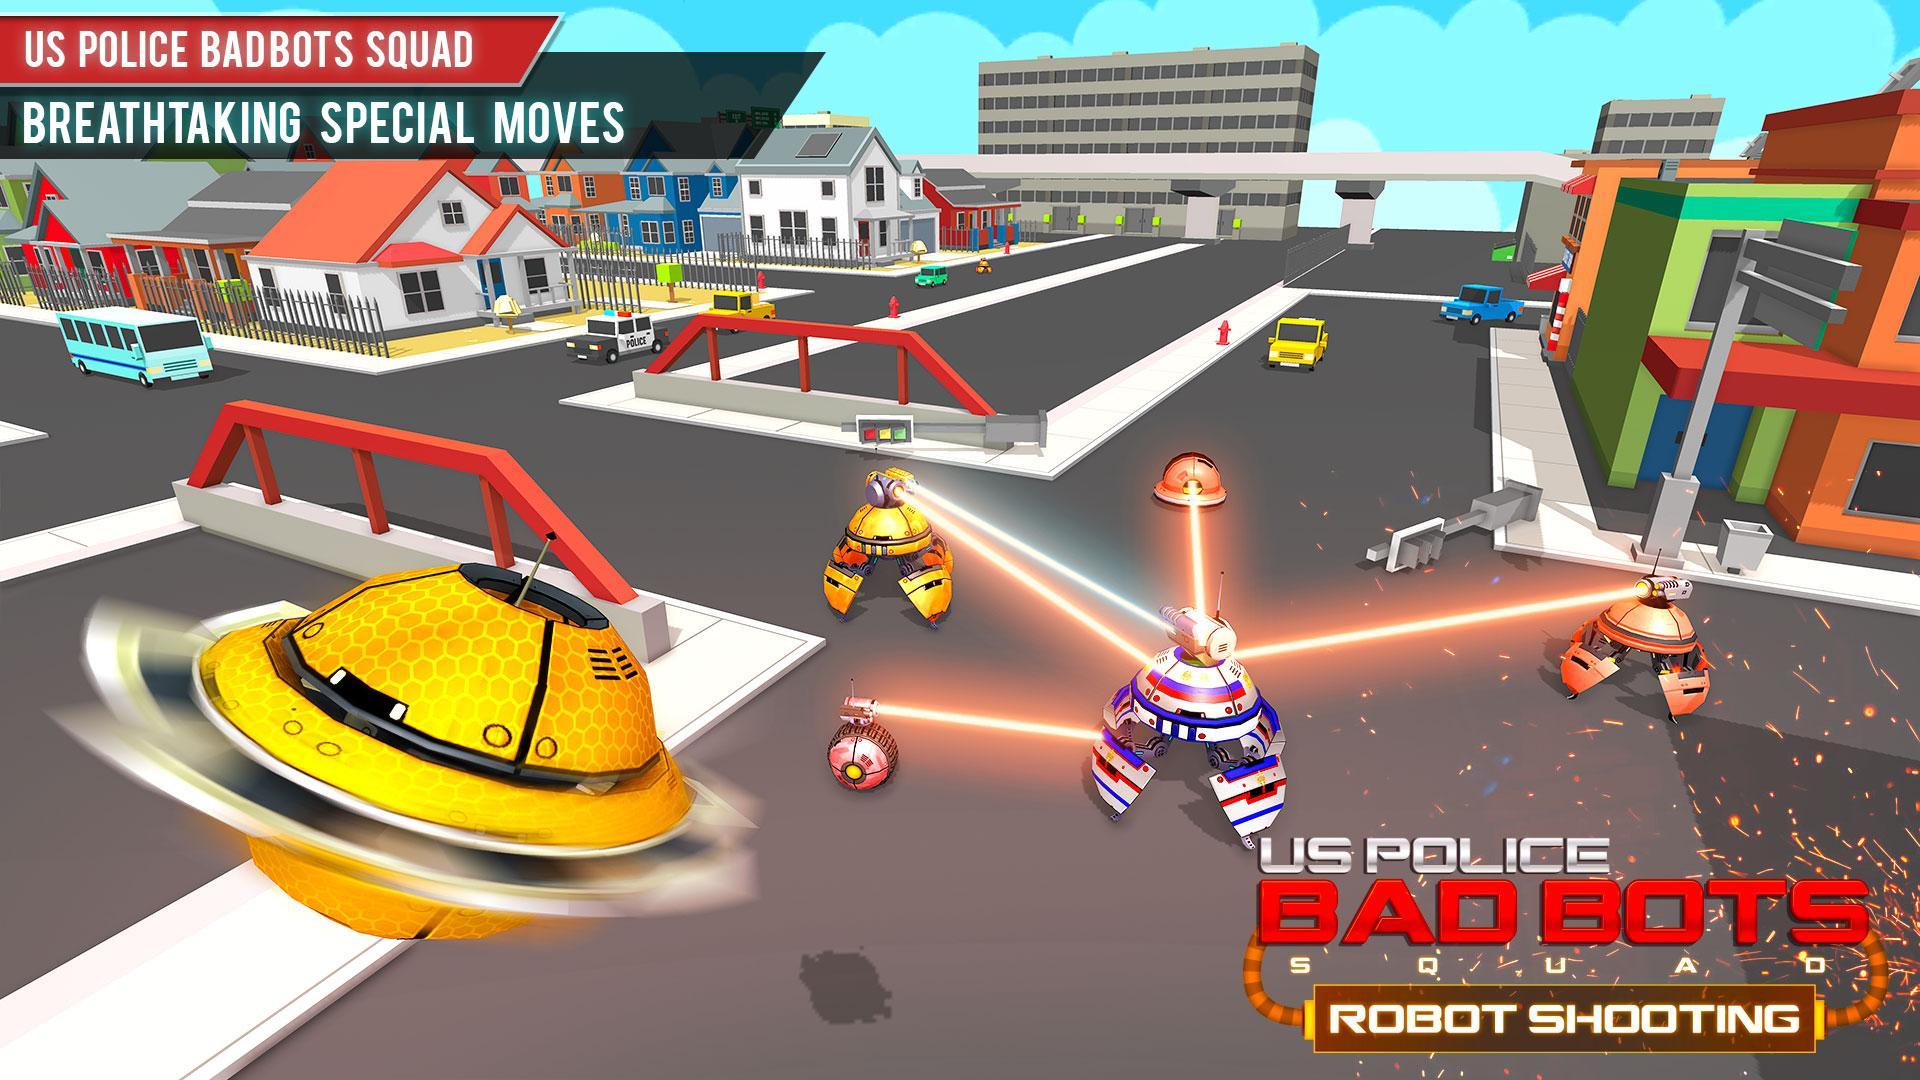 US Police Futuristic Robot Transform Shooting Game 2.0.4 Screenshot 10